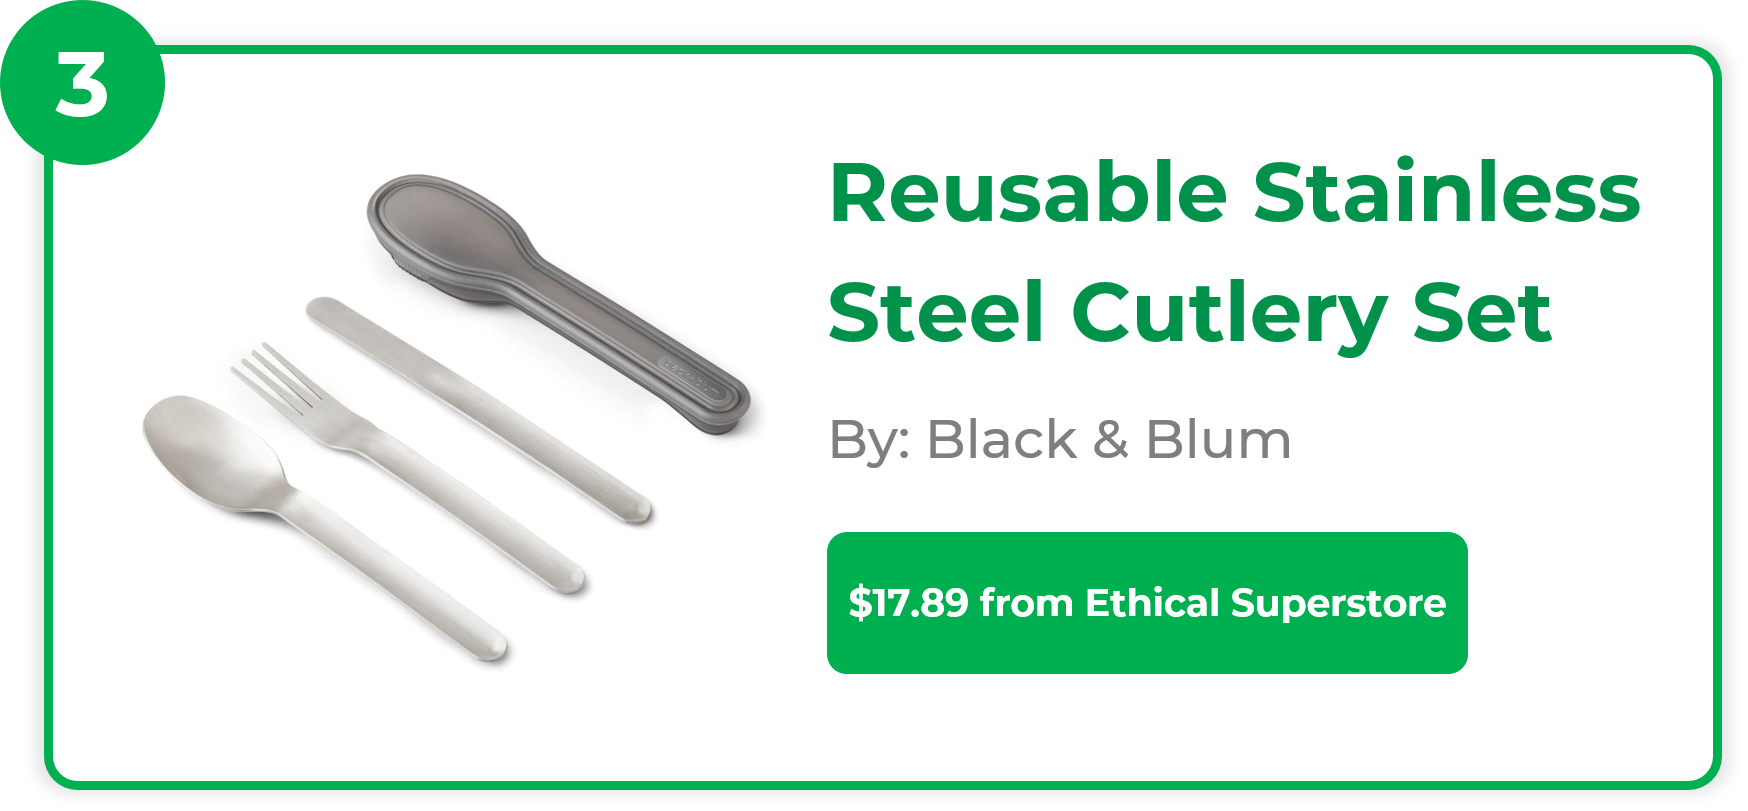 Reusable Stainless Steel Cutlery Set - Black & Blum